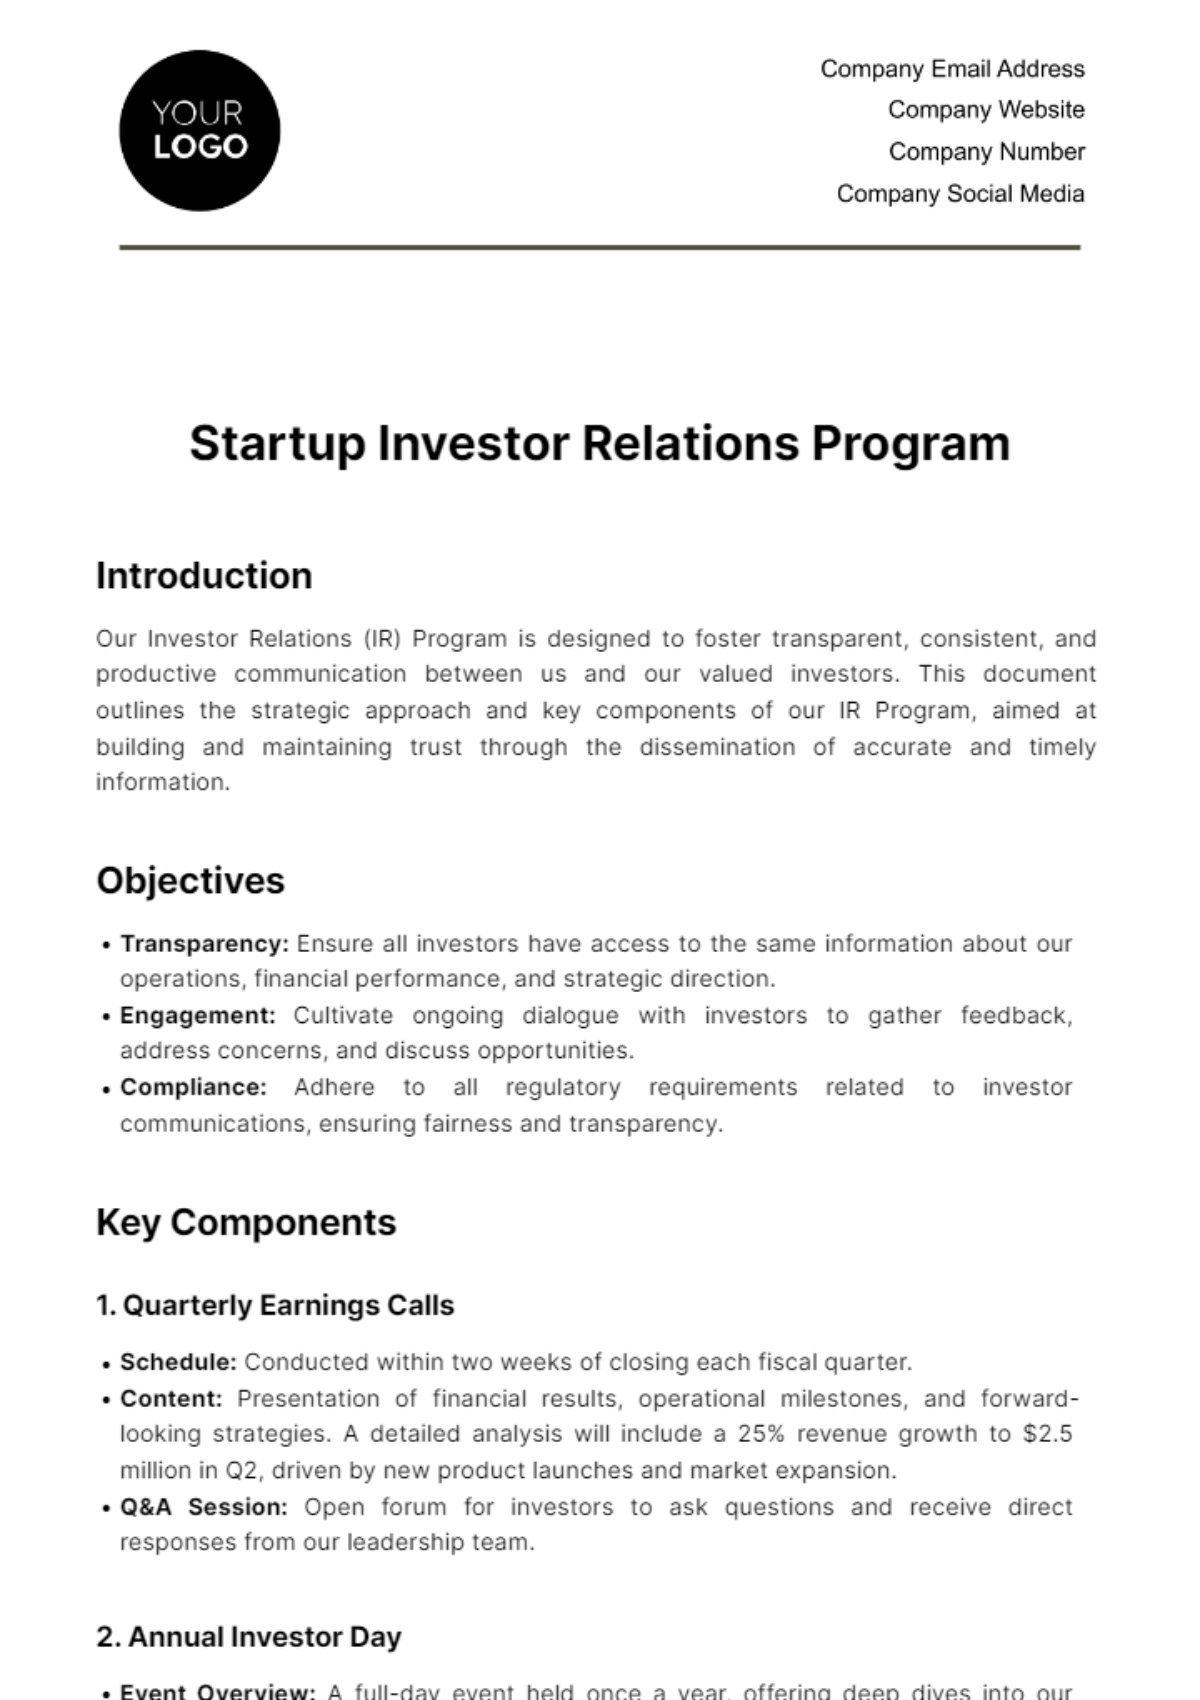 Startup Investor Relations Program Template